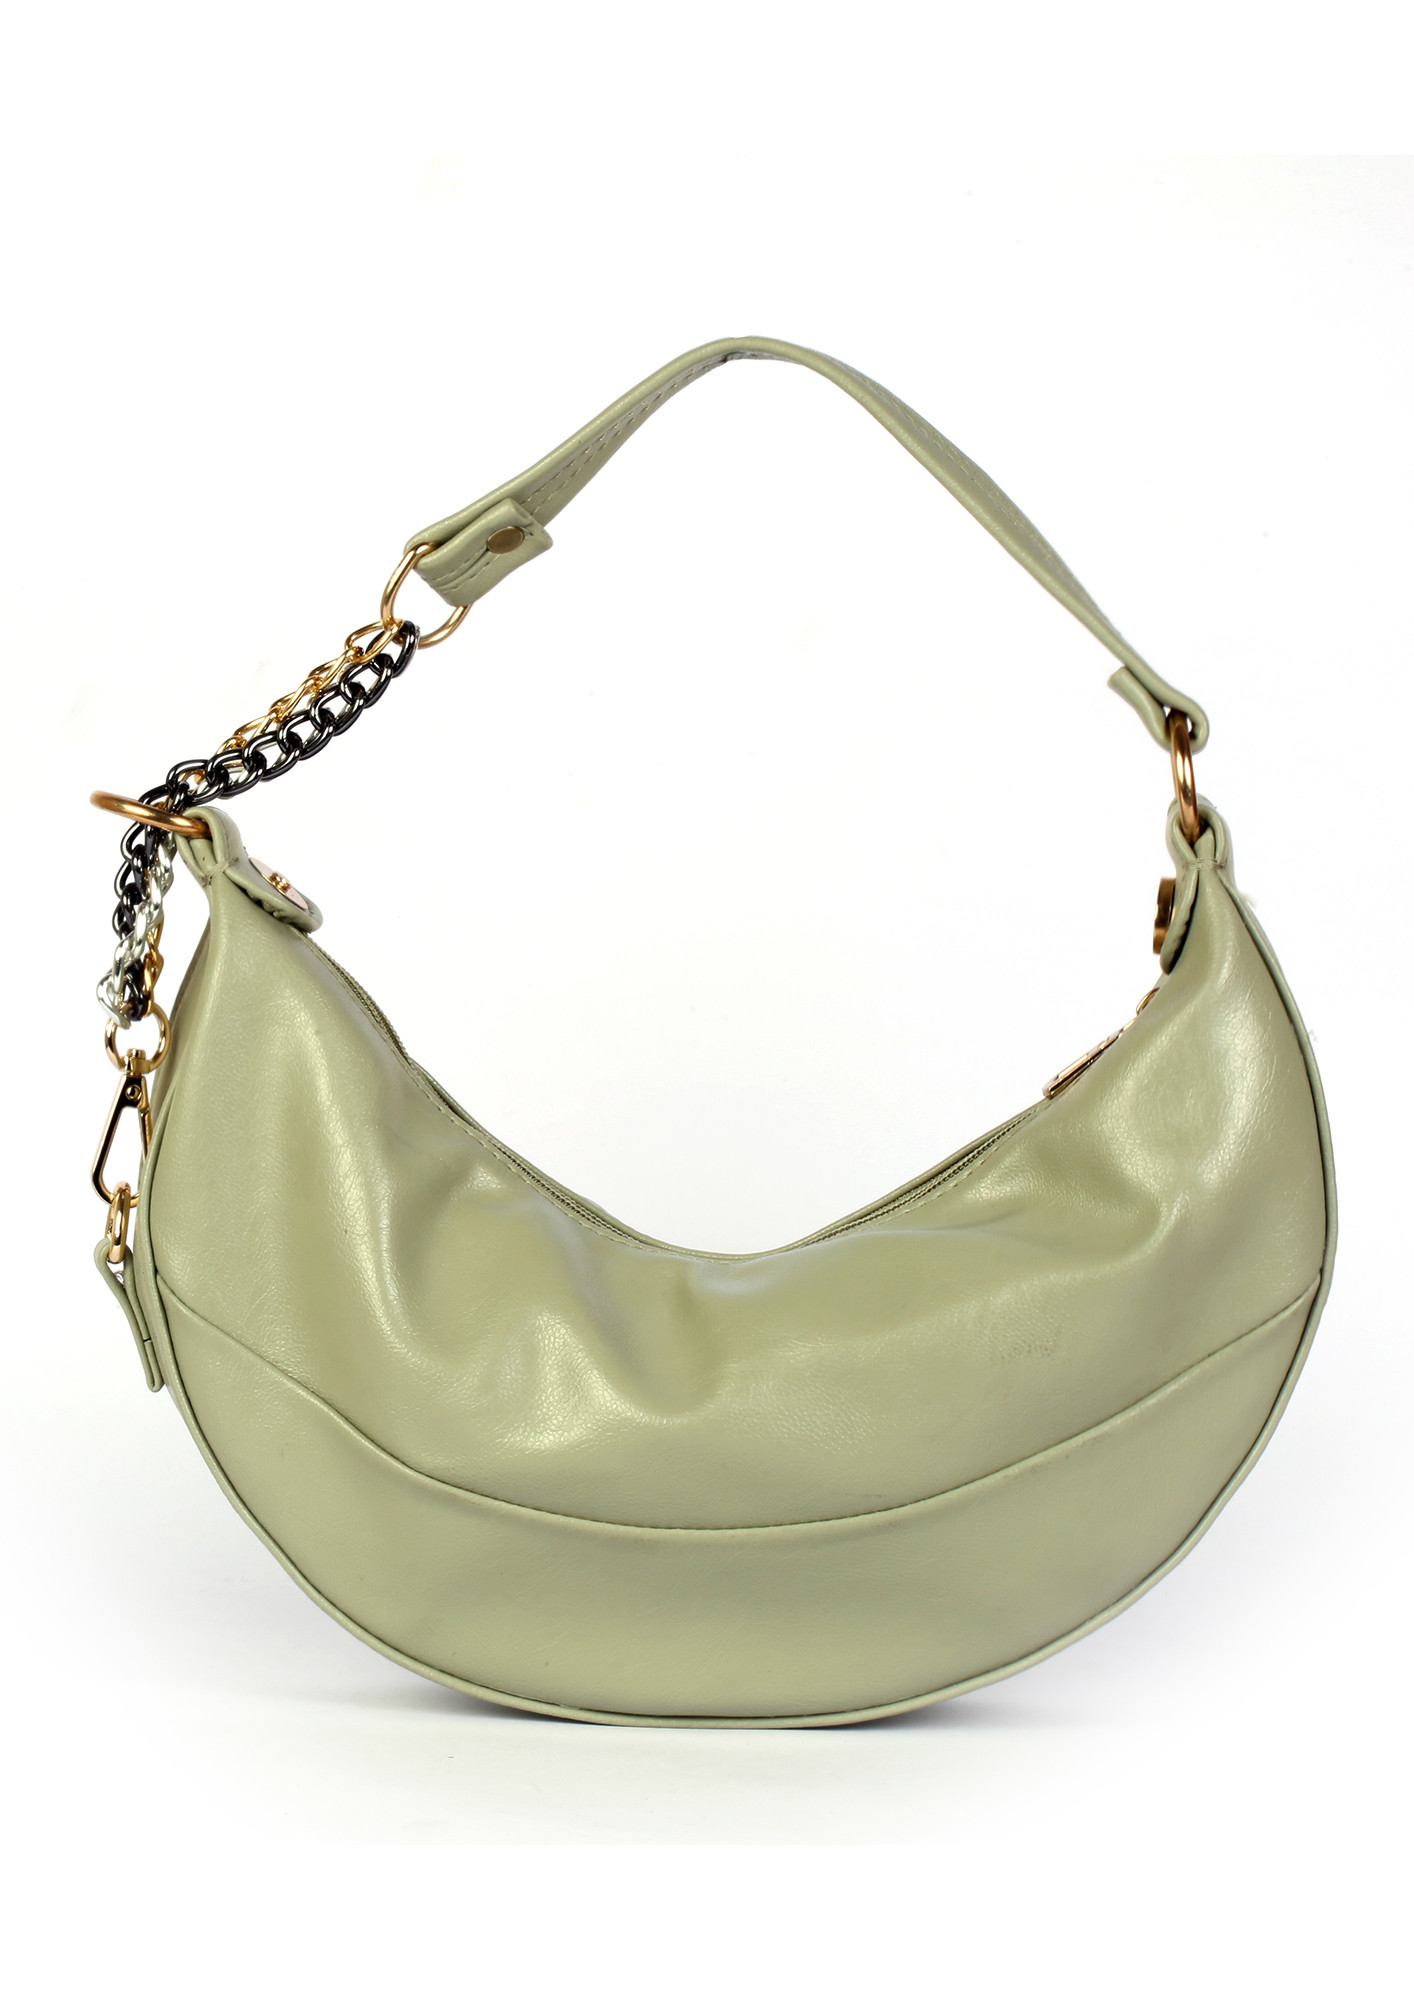 Buy Stylish Handbags Online In India -  India